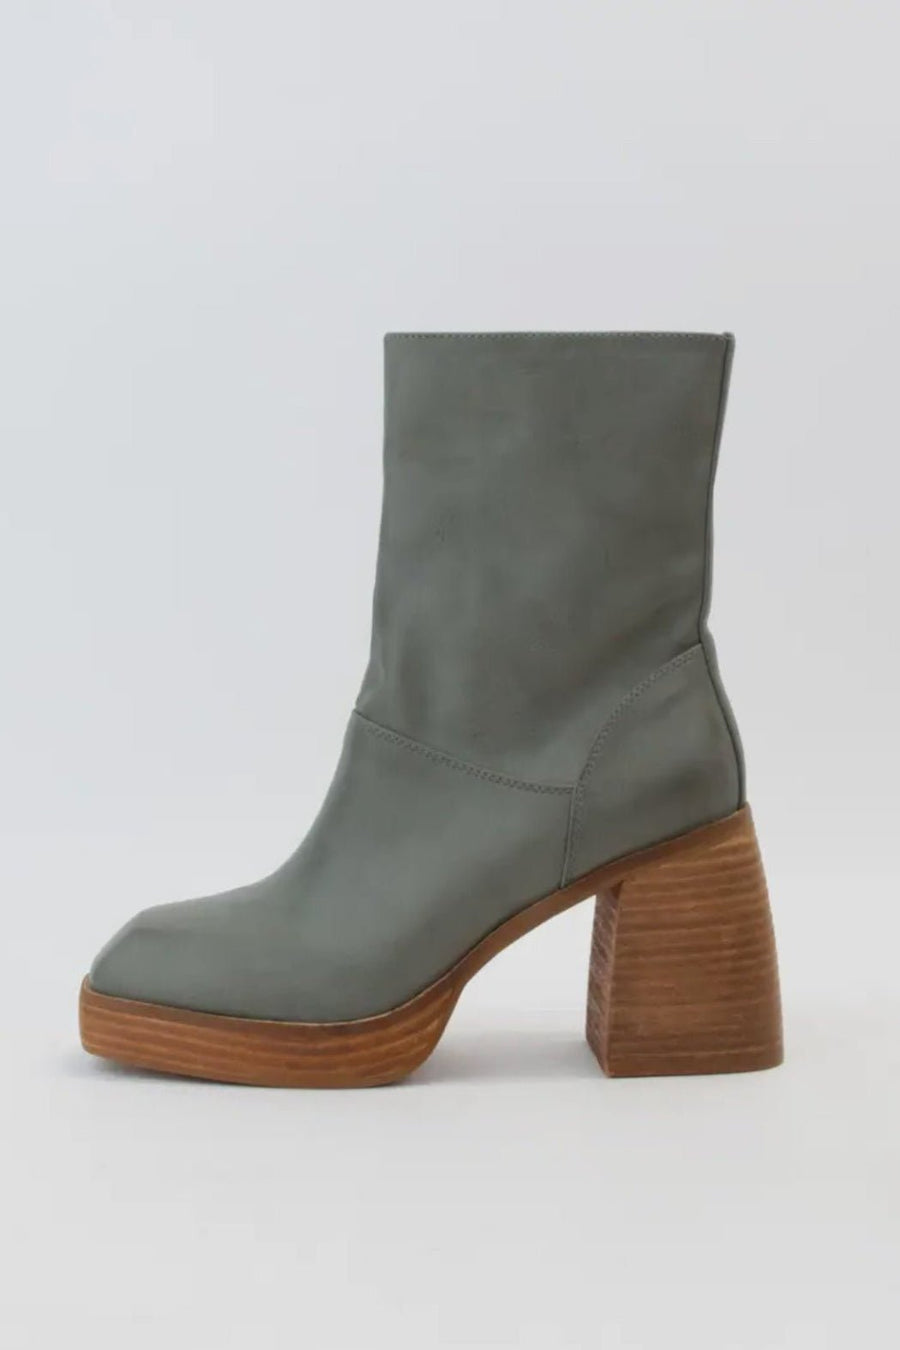 Chunky Angular toe platform boots by CCOCCI - moss - Blue Sky Fashions & Lingerie